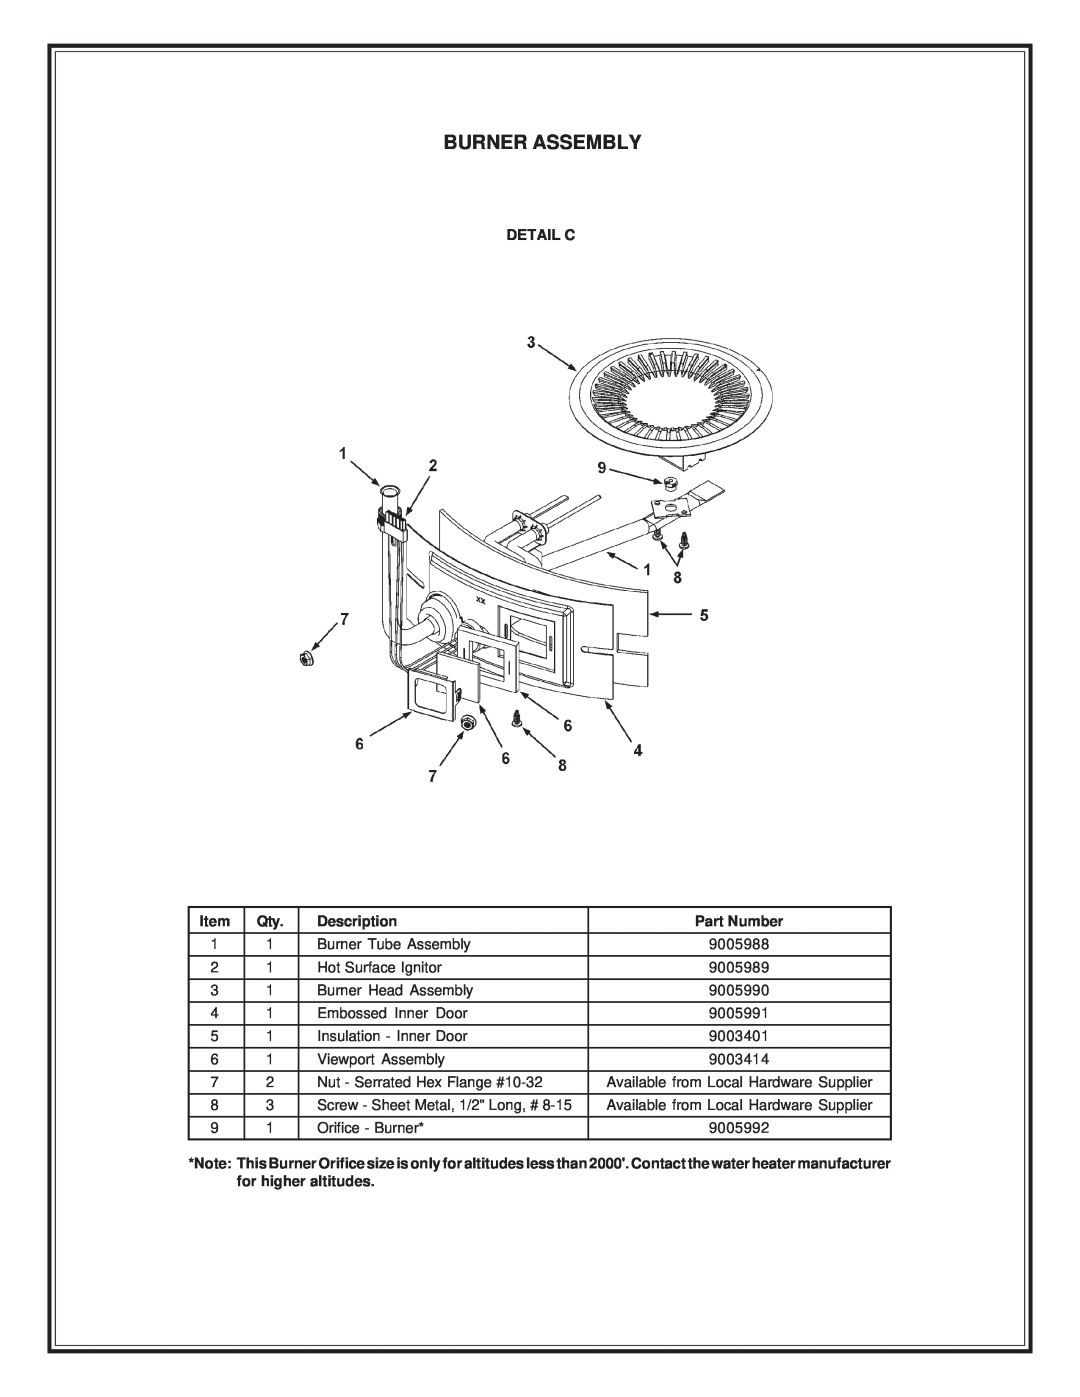 State Industries GP6 50 YTVIT manual Burner Assembly, Detail C, Description, Part Number 